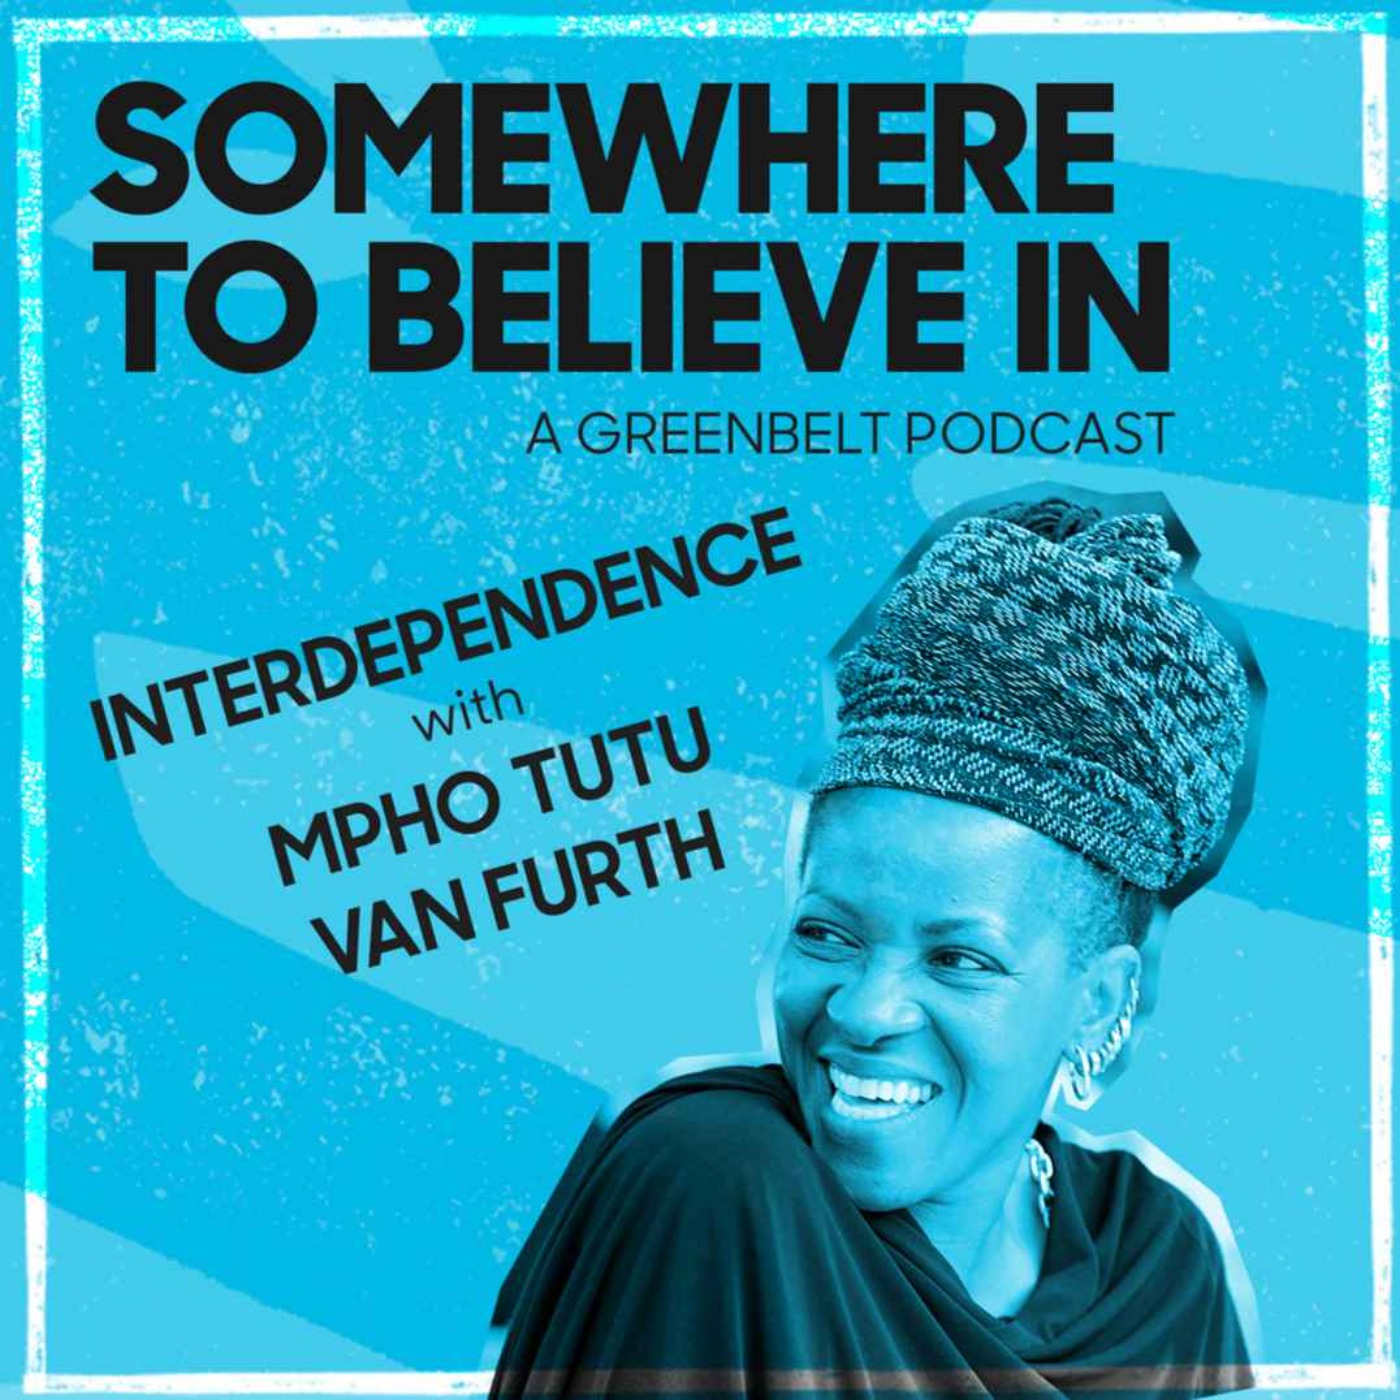 Interdependence with Mpho Tutu van Furth